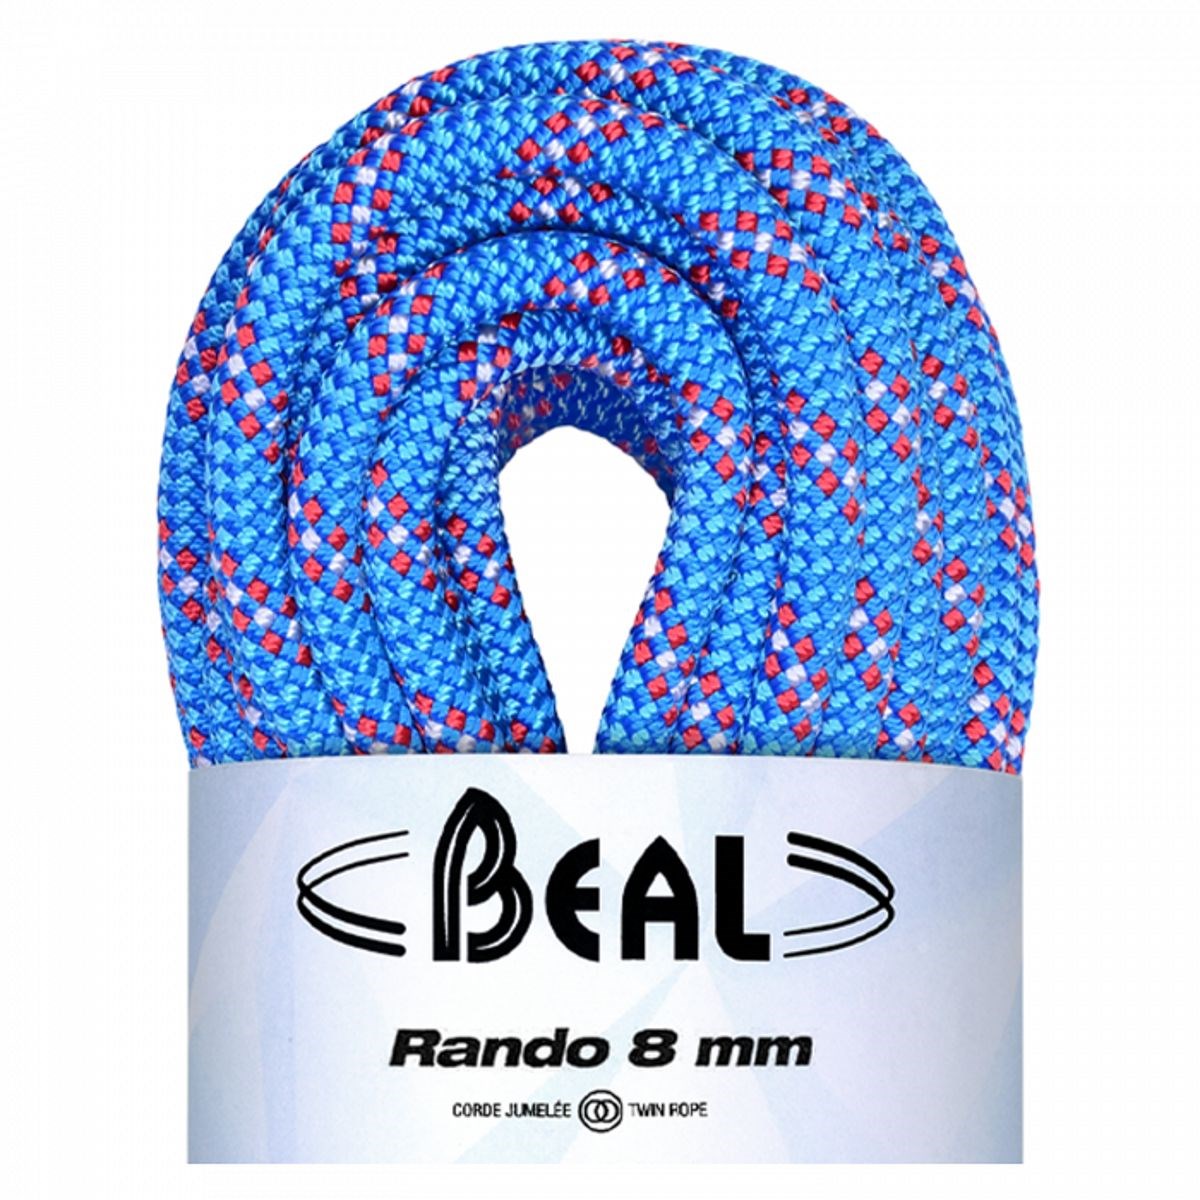 Lano Beal Rando Clasic 8 mm blue Beal 10025893 L-11